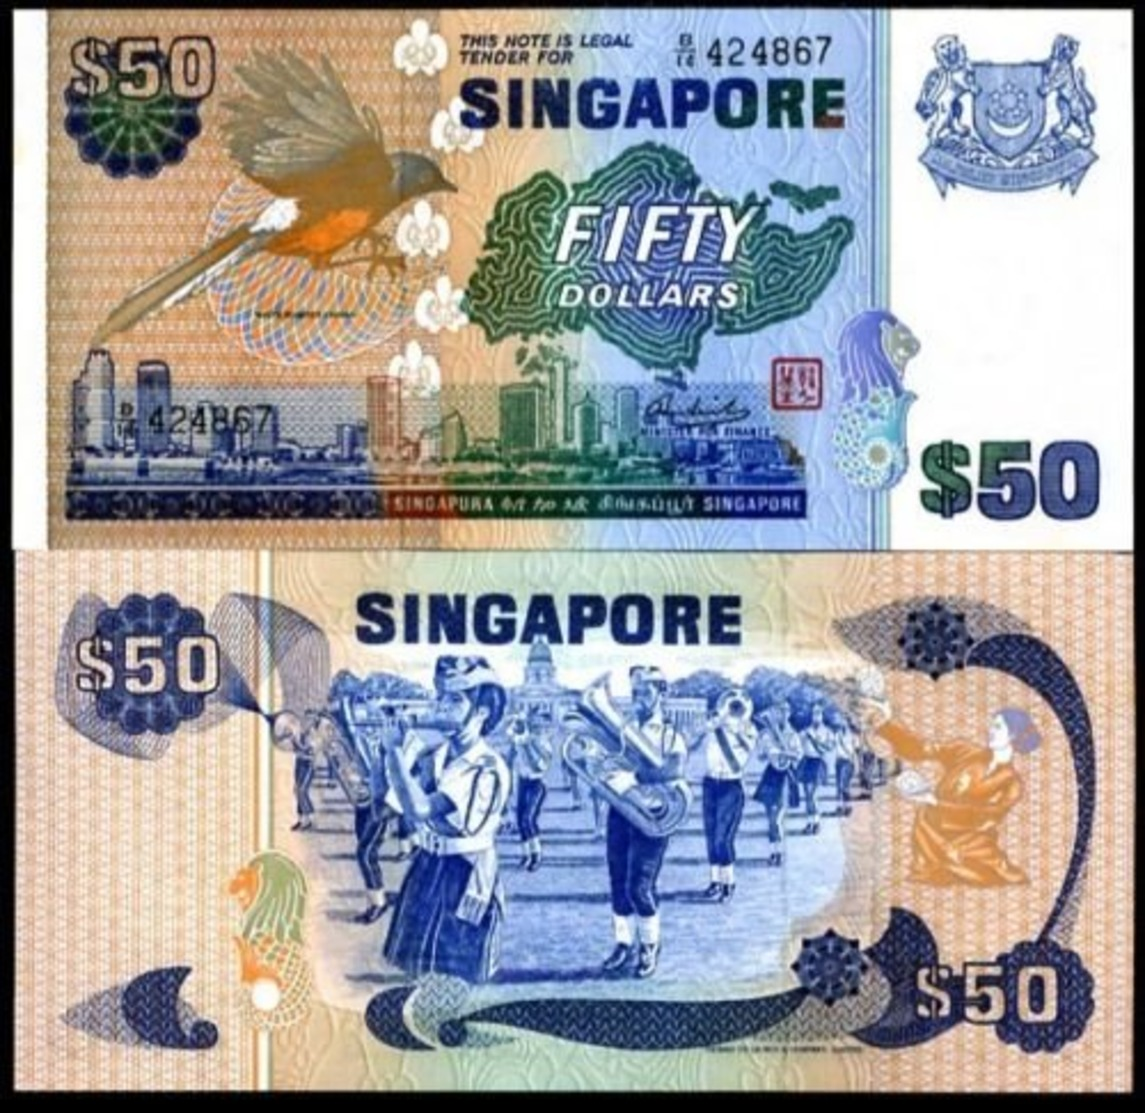 SINGAPORE 50 DOLLARS ND 1976 BIRD SERIE P 13 UNC - Singapore